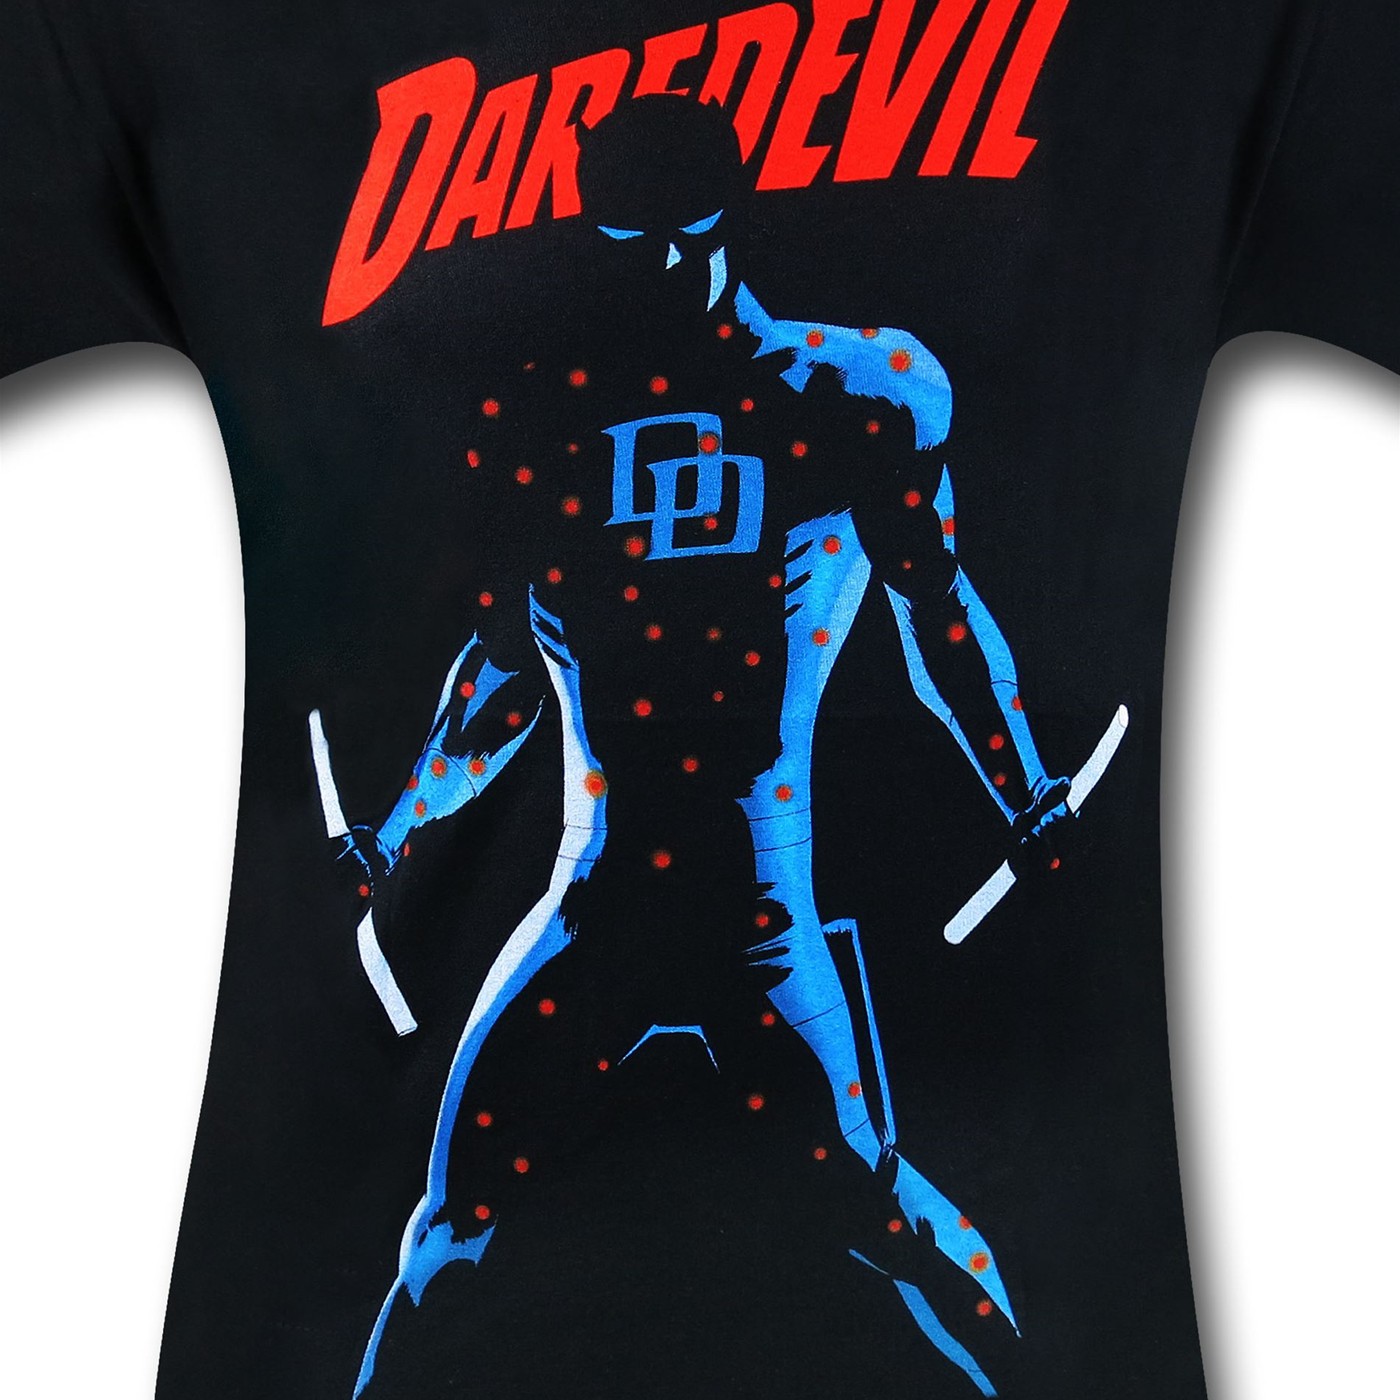 Daredevil Target T-Shirt